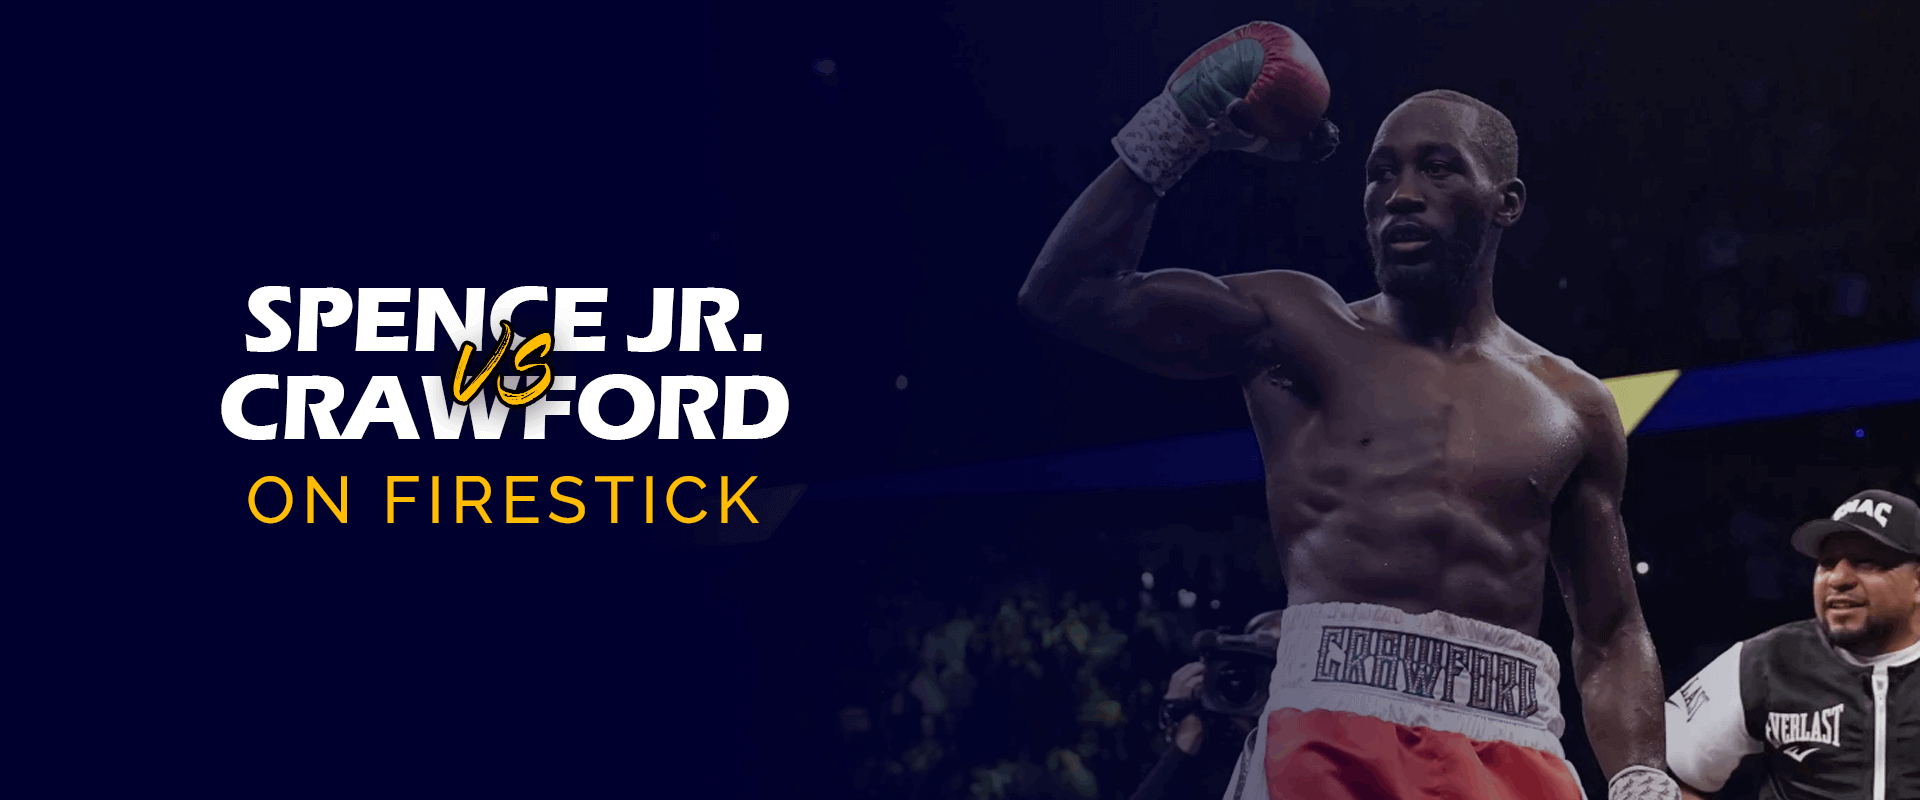 Watch Errol Spence Jr. vs Terence Crawford on Firestick